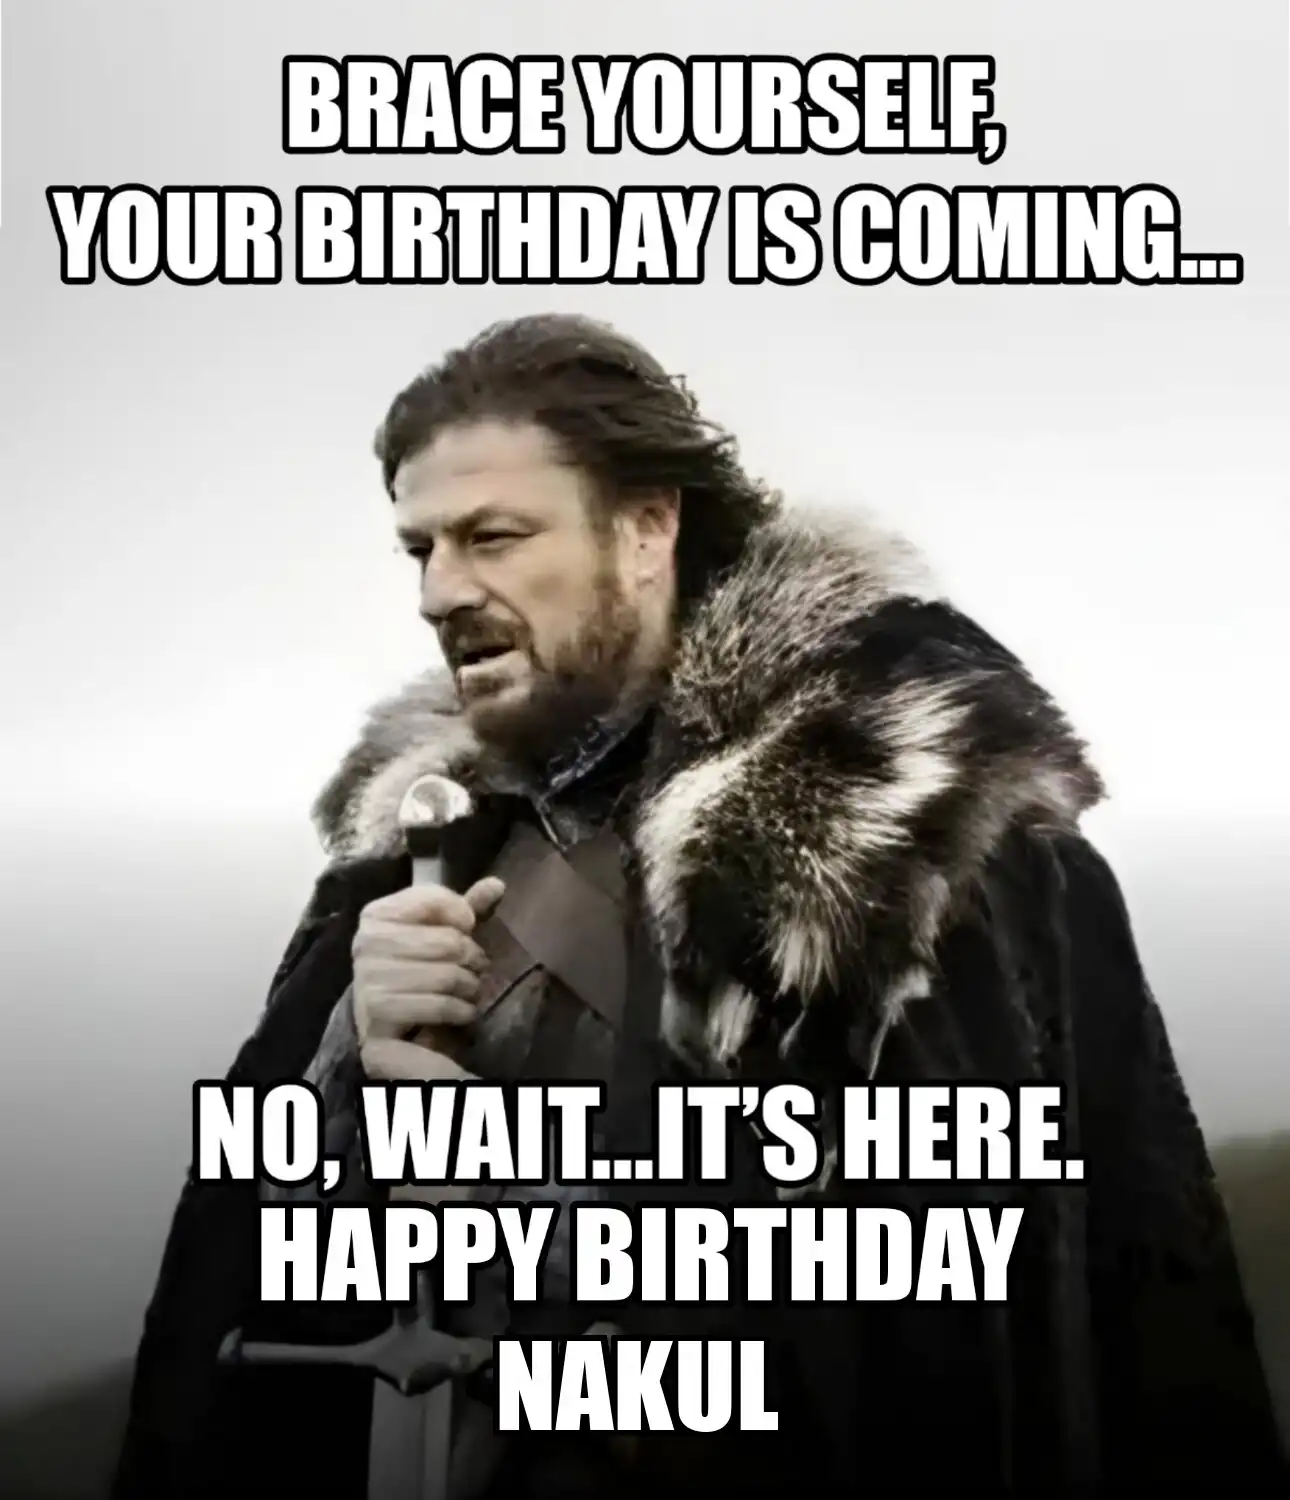 Happy Birthday Nakul Brace Yourself Your Birthday Is Coming Meme